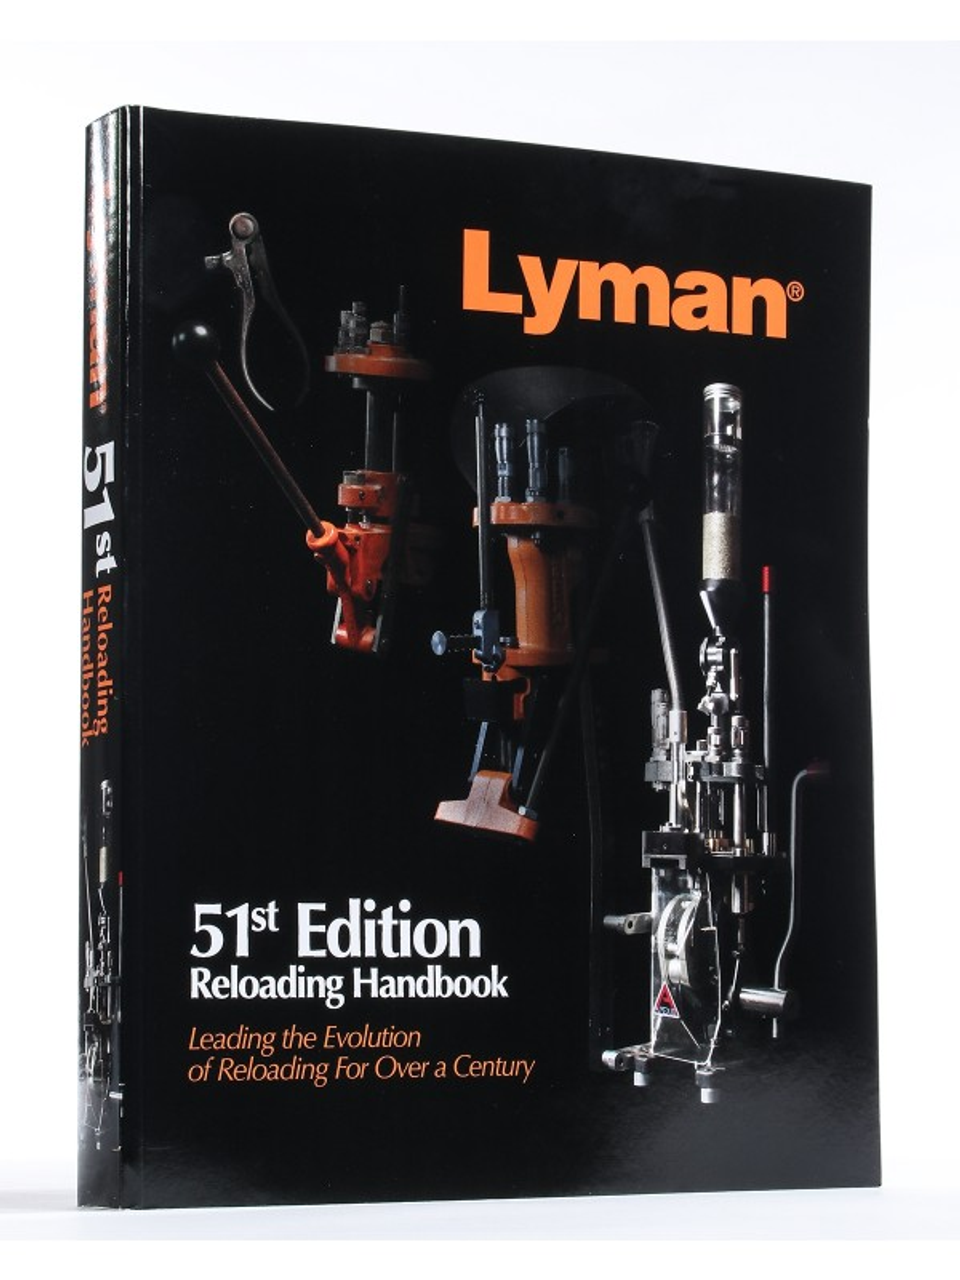 Lyman 51st Edition Reloading Handbook Soft Cover